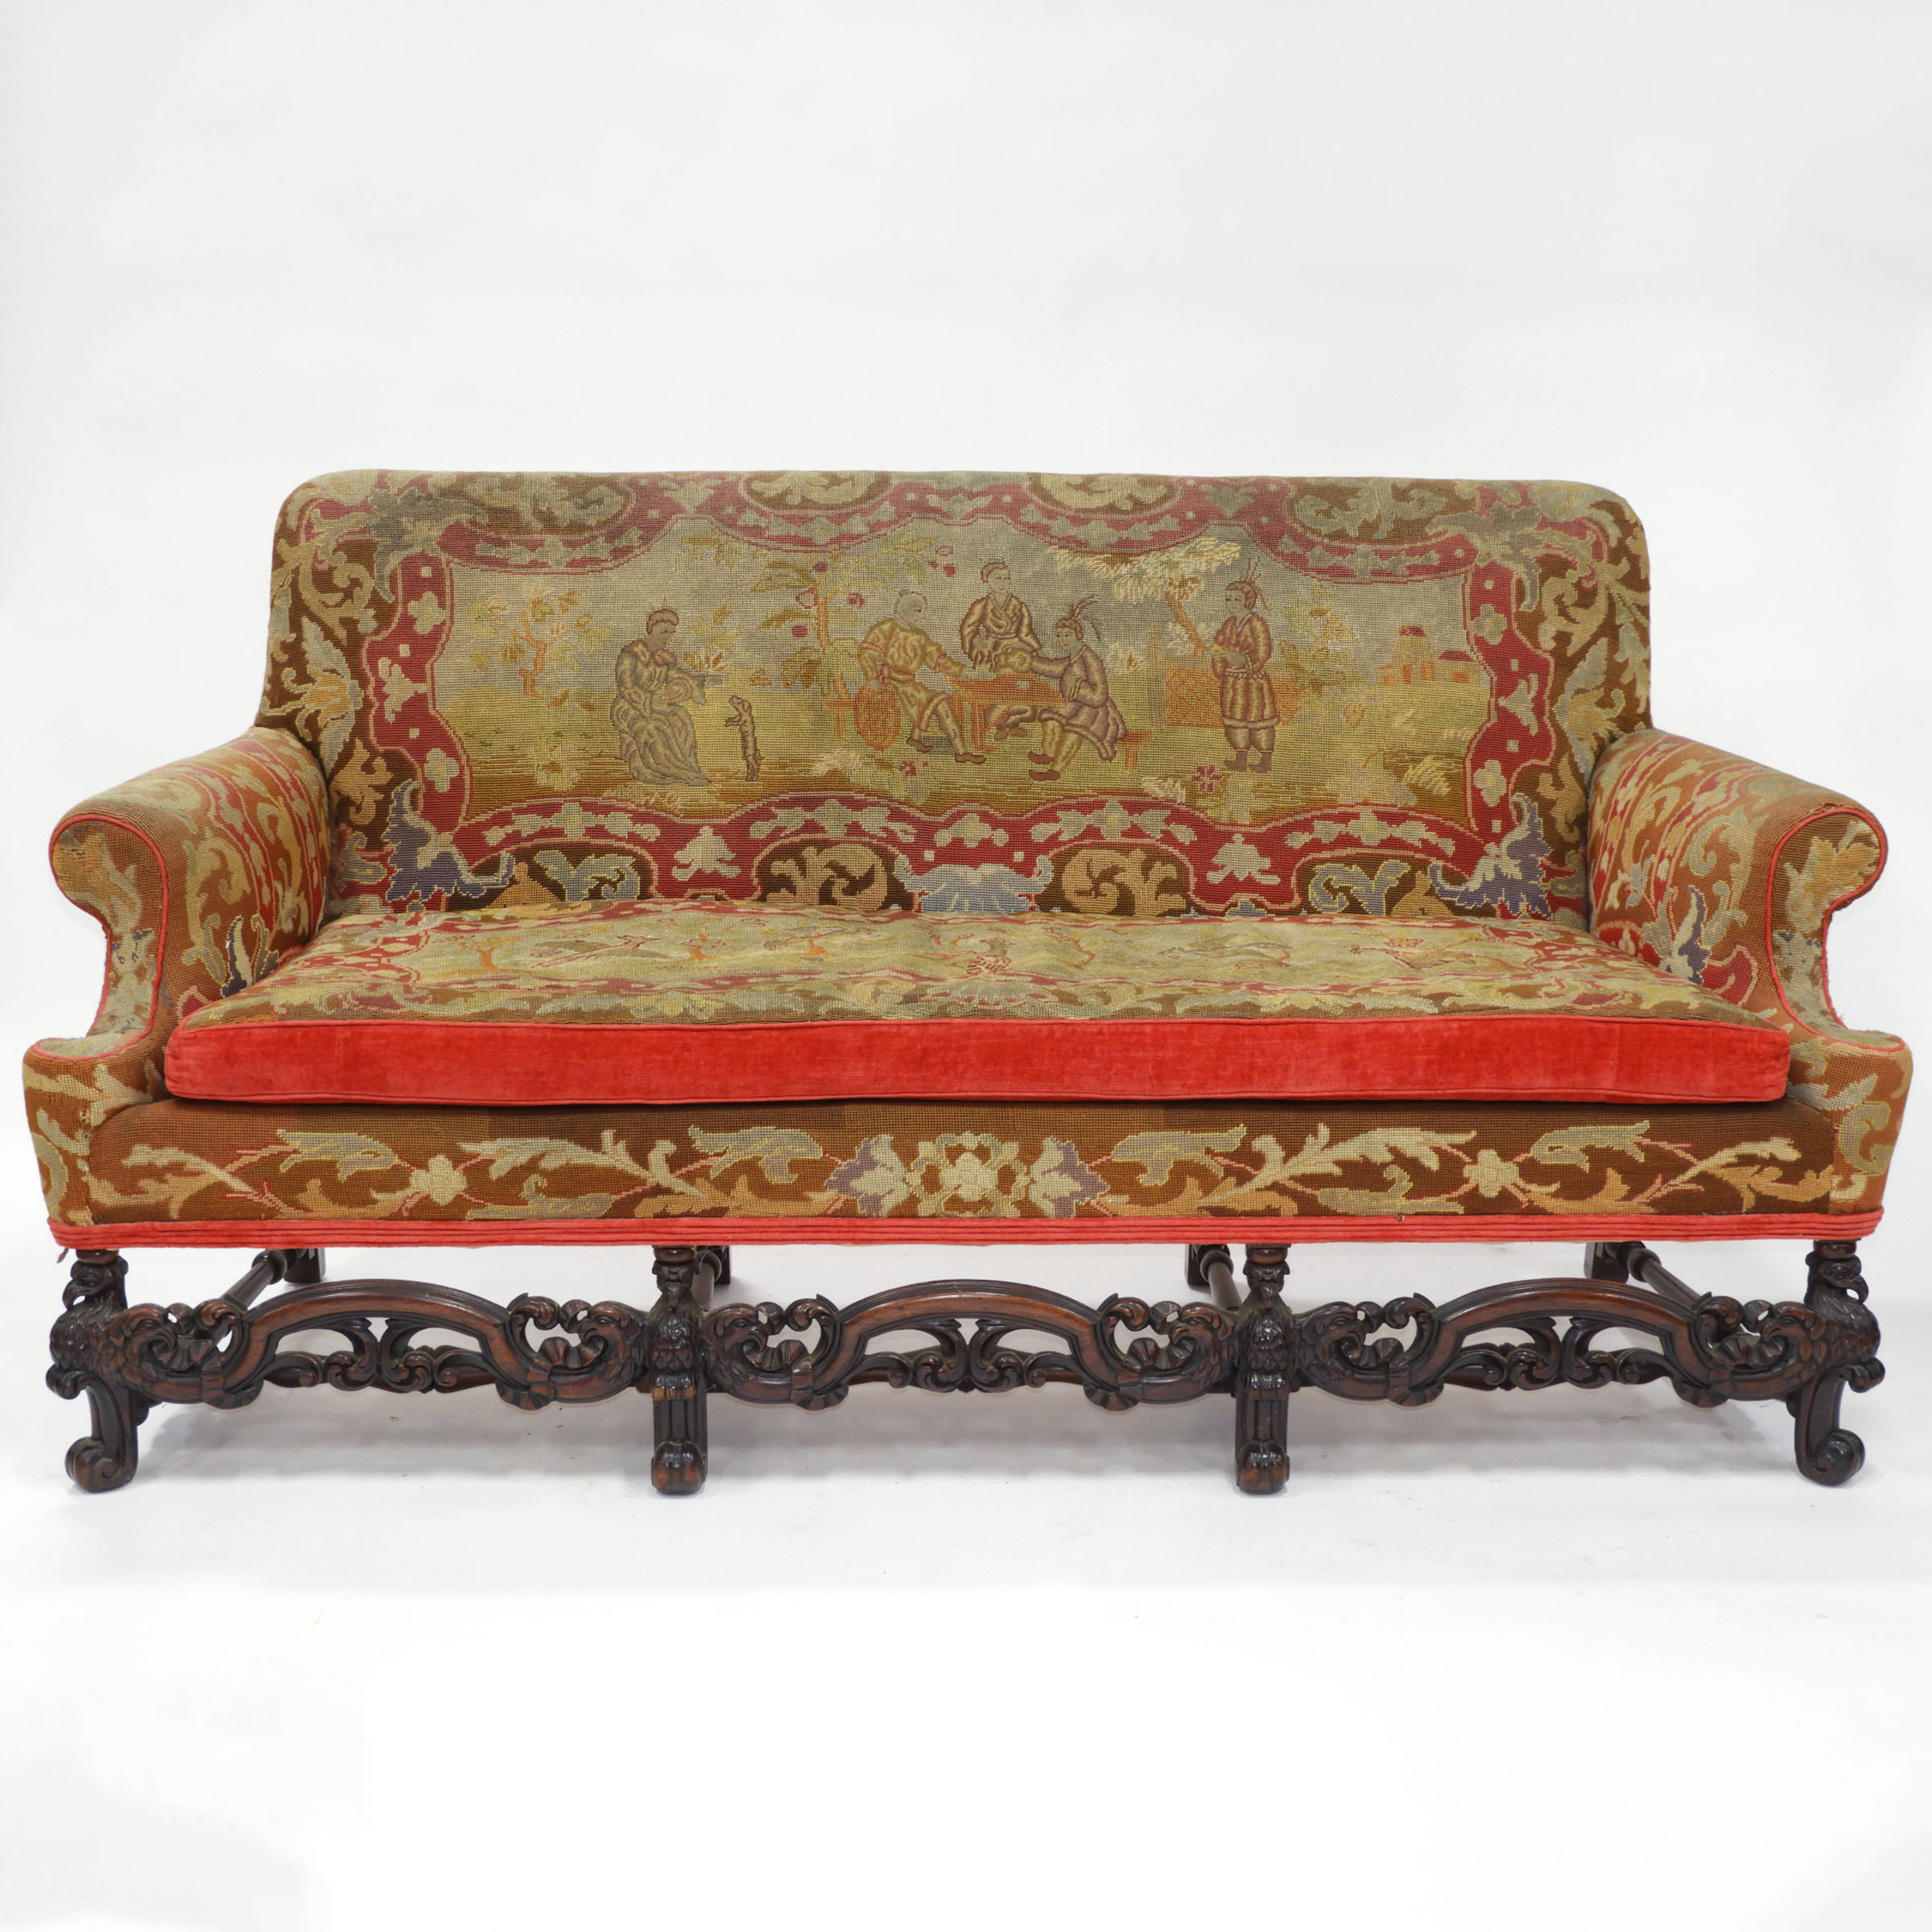 17th century style Sofa 19th century 3abd0a